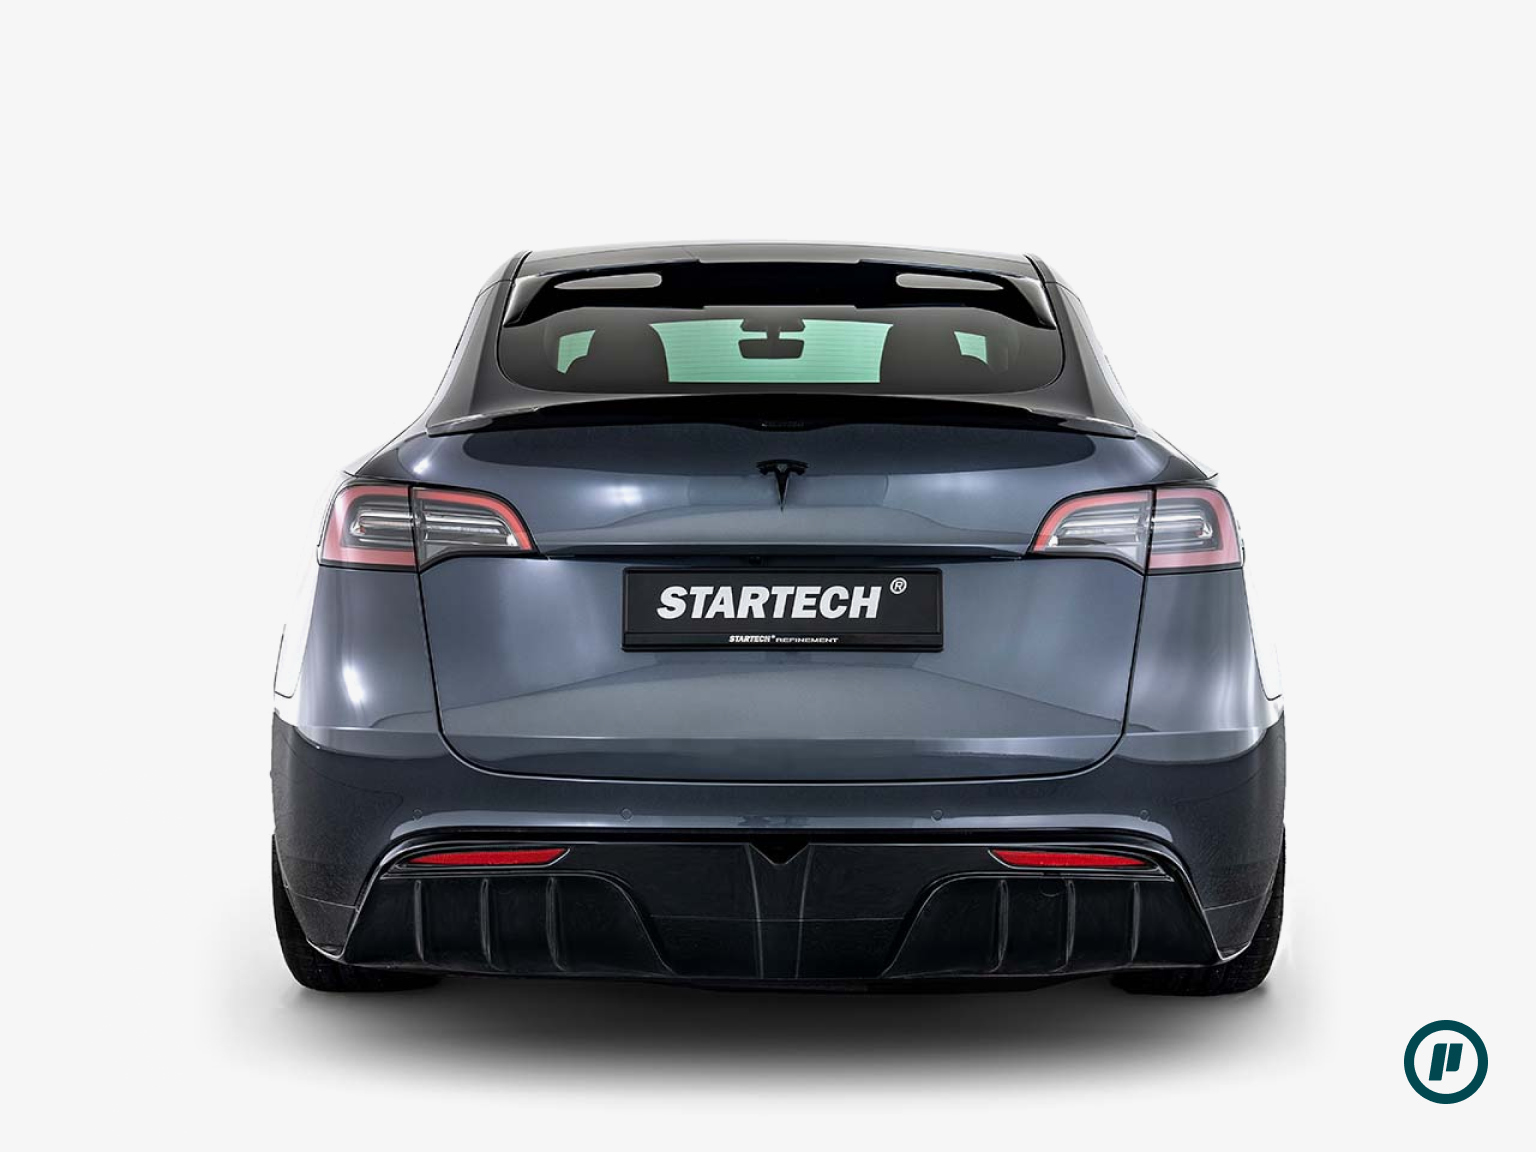 Startech Rear Valance for Tesla Model Y (2020+)